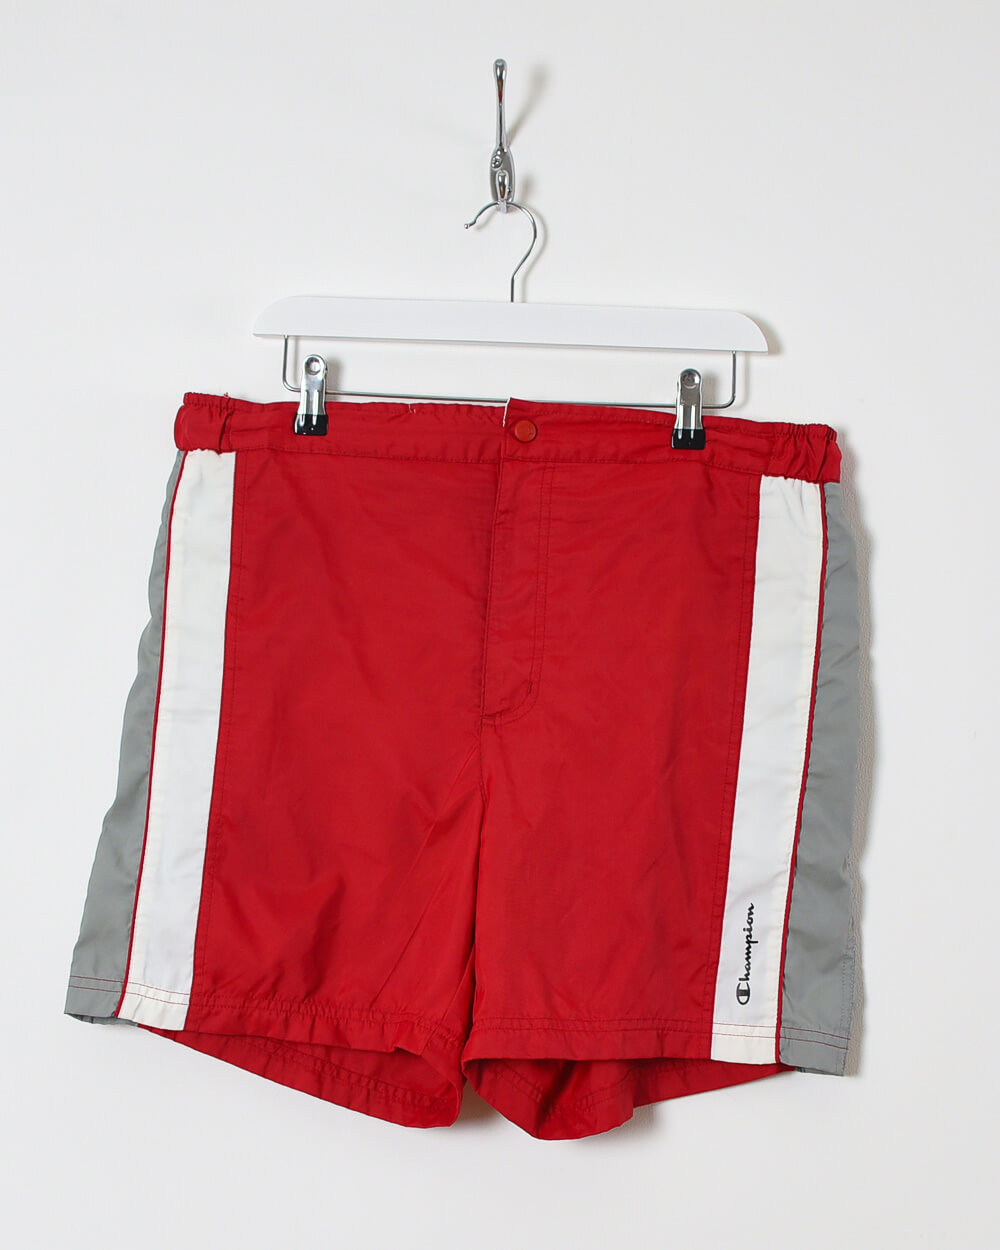 Champion Swimwear Shorts - W36 - Domno Vintage 90s, 80s, 00s Retro and Vintage Clothing 